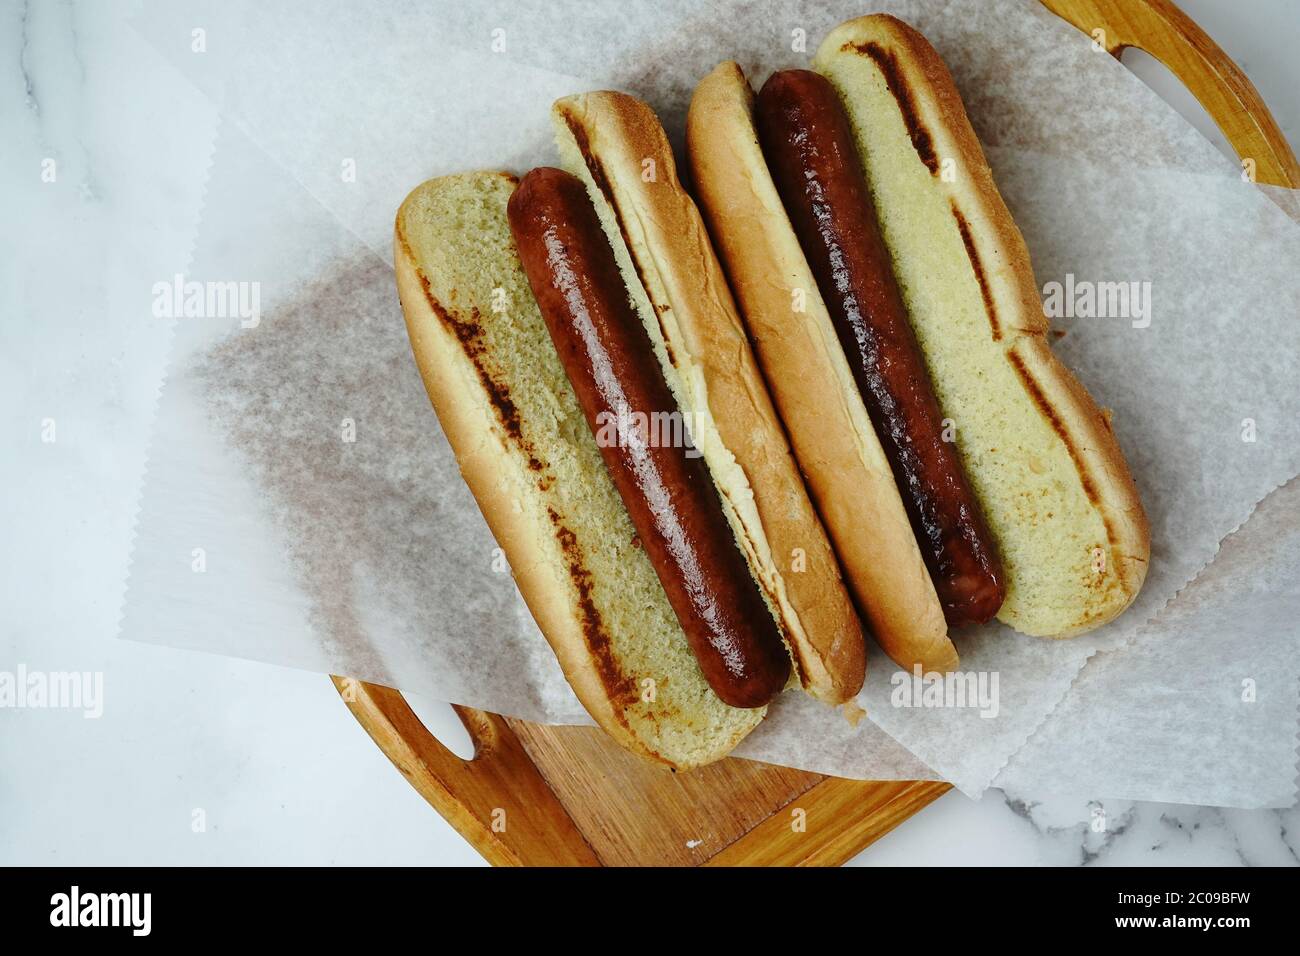 Homemade hot dogs Stock Photo